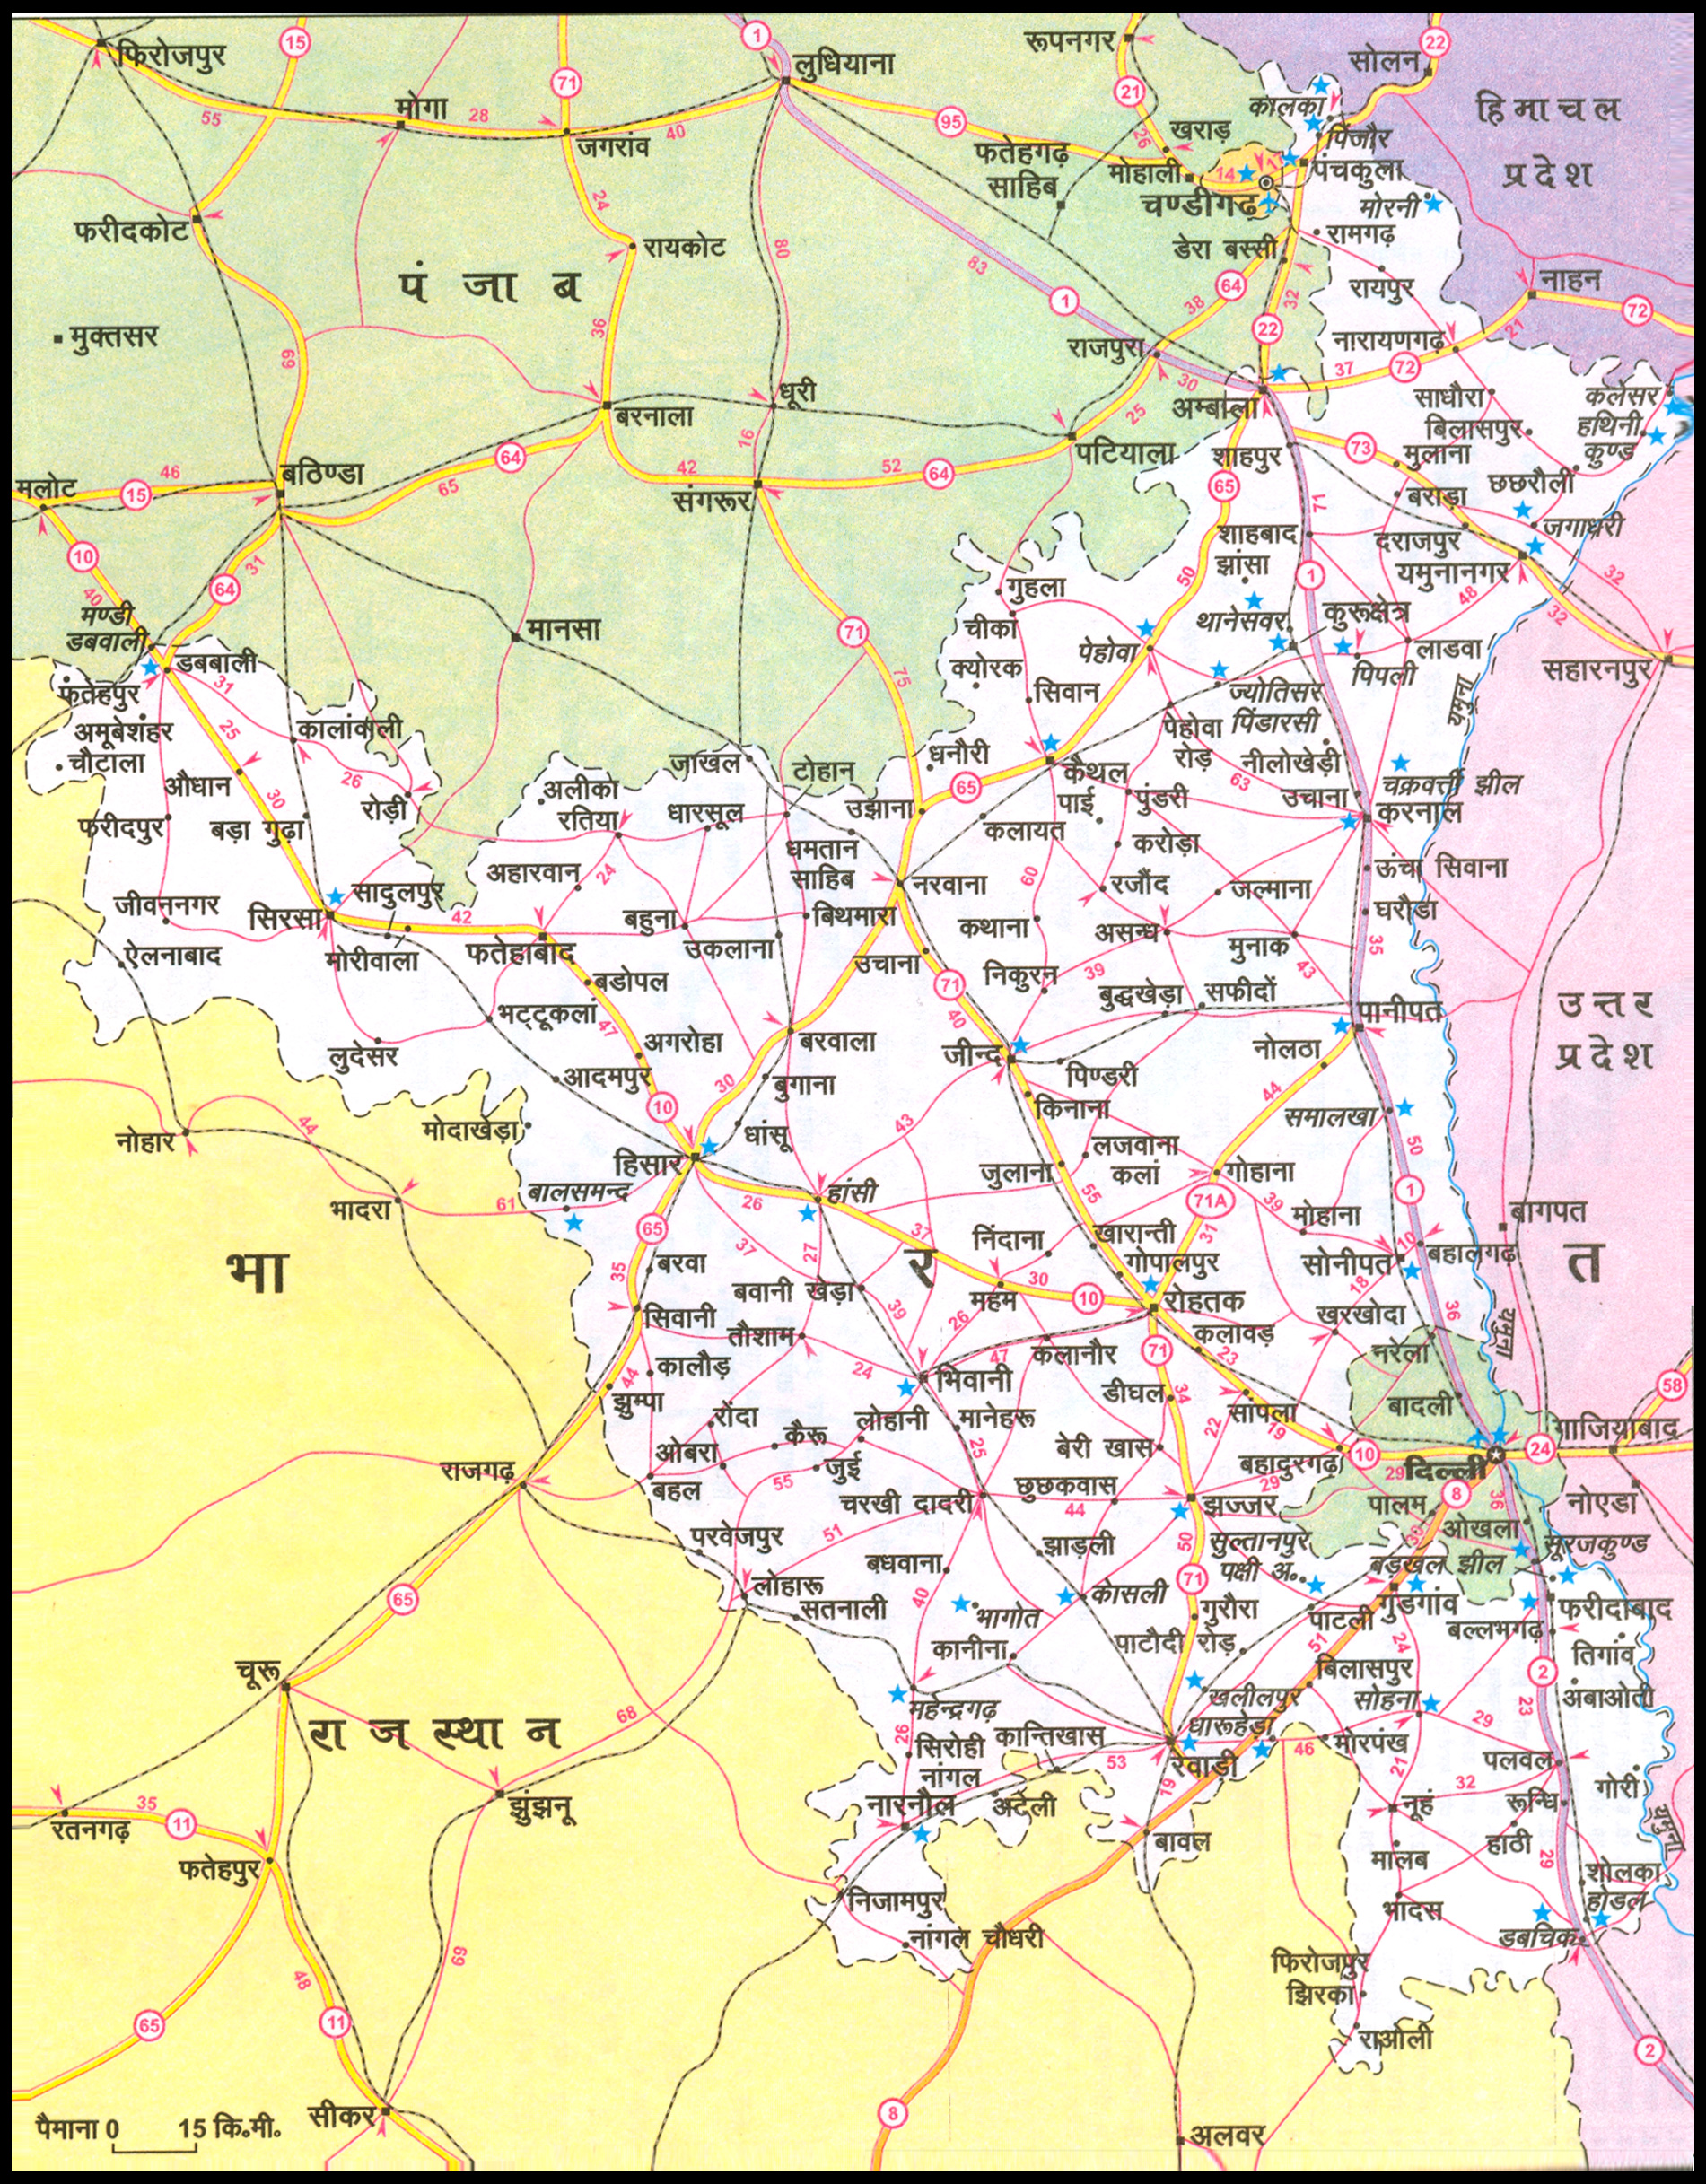 Haryana Map In Hindi चित्र:Haryana-Map.jpg - भारतकोश, ज्ञान का हिन्दी महासागर